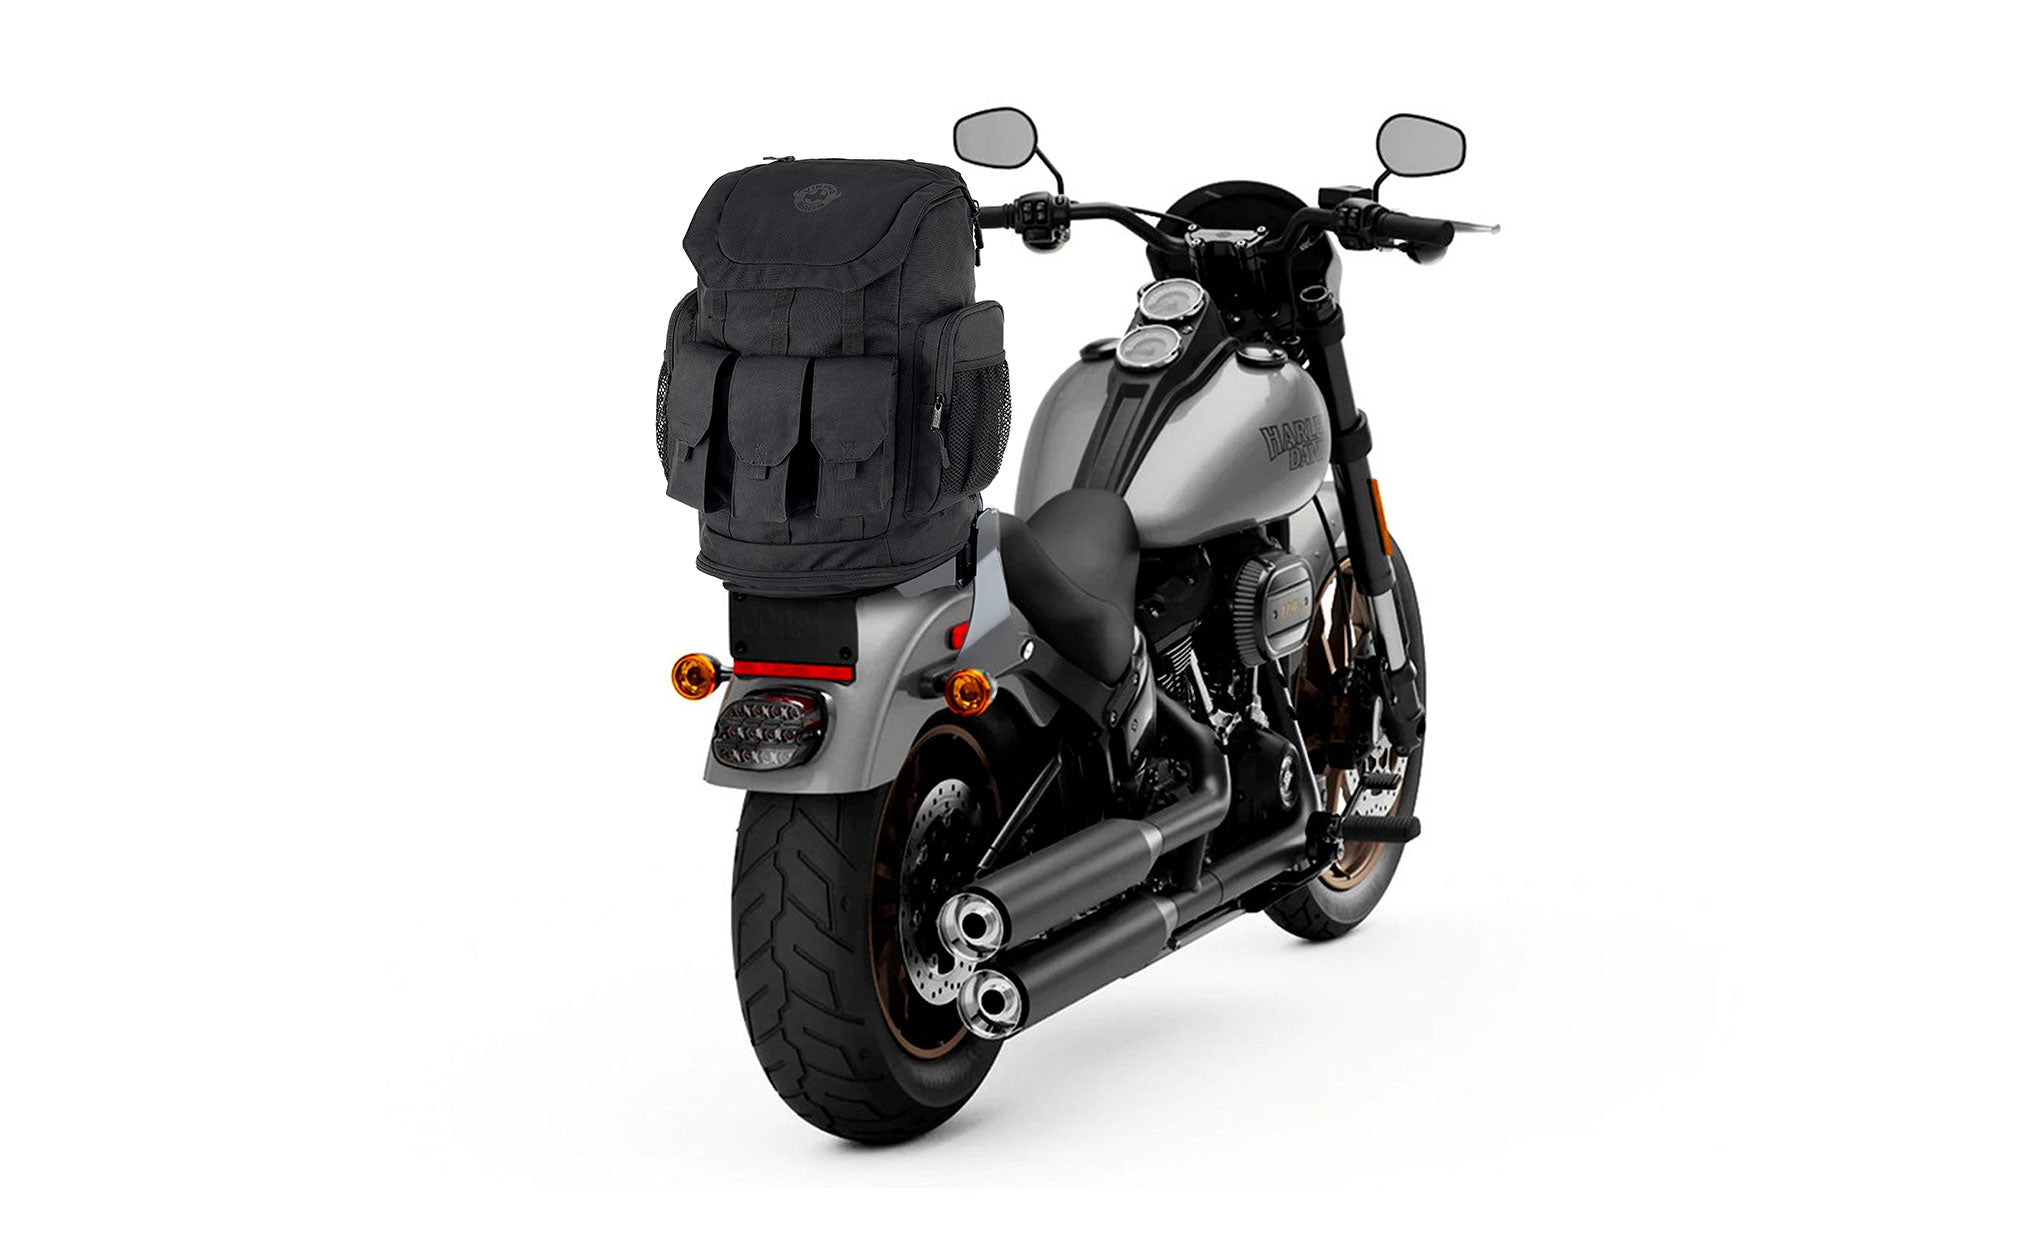 Viking Trident XL Honda Motorcycle Backpack Bag on Bike View @expand